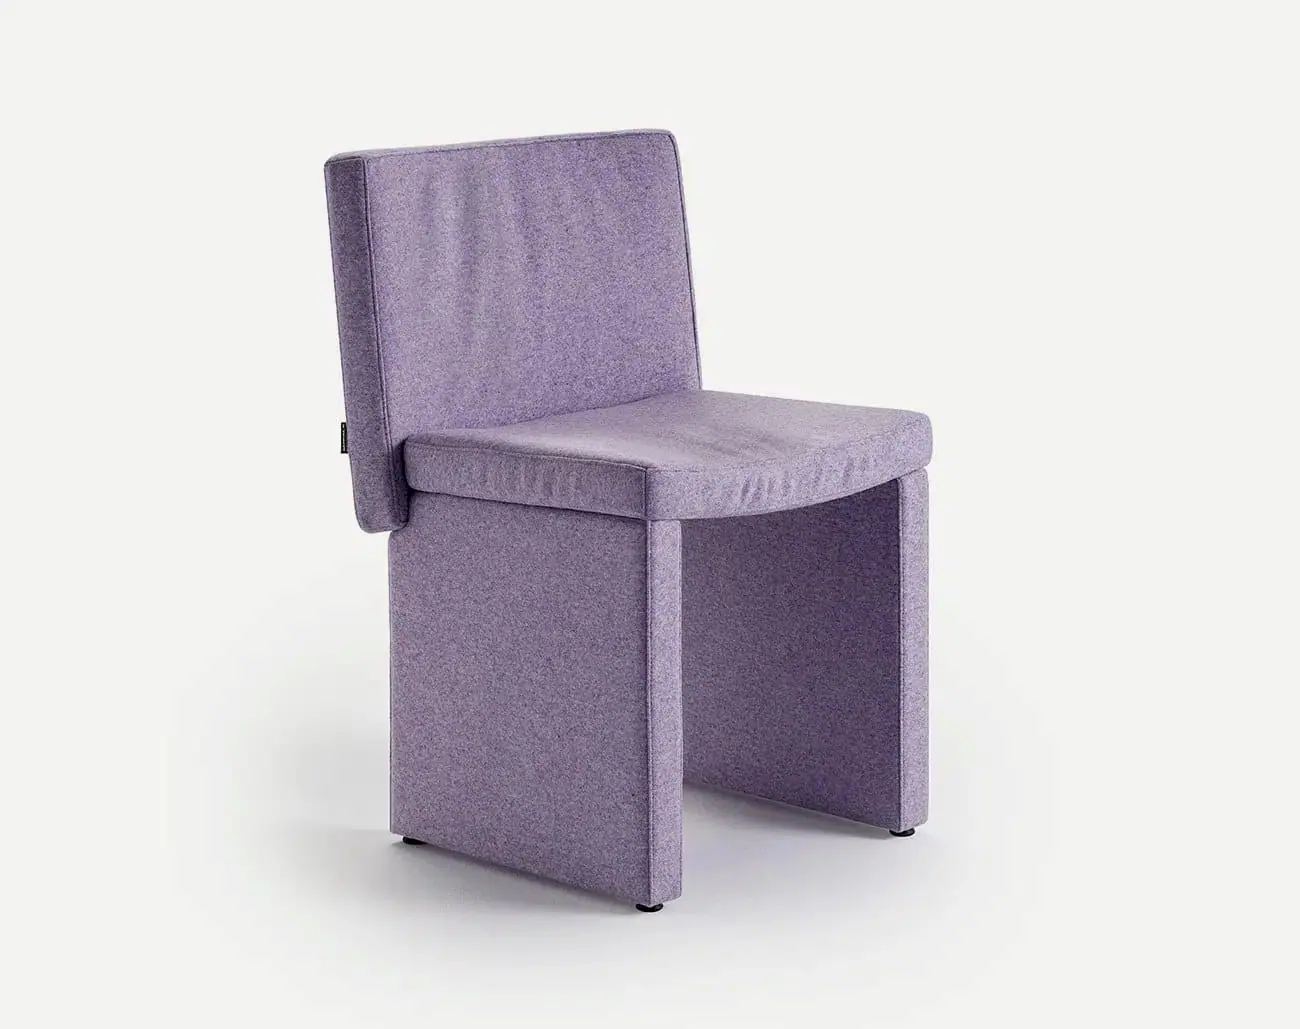 sancal-producto-bench-chair-table-cita-005